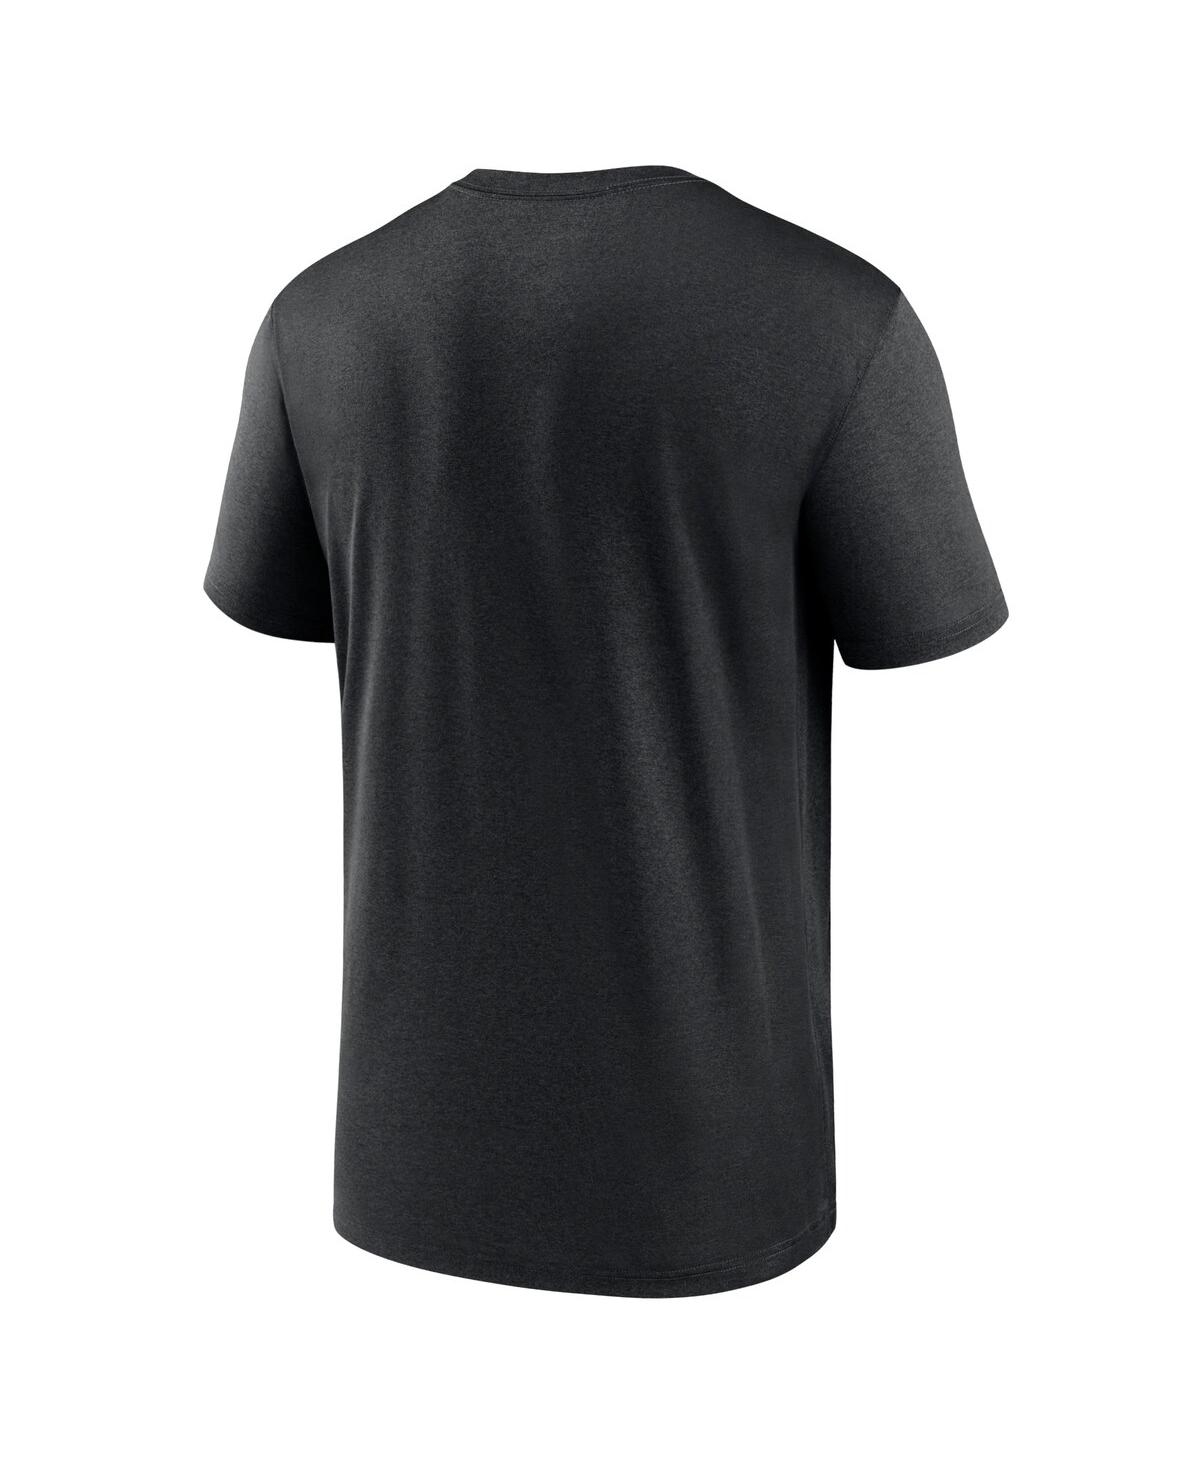 Shop Nike Men's  Black Chicago White Sox Icon Legend T-shirt